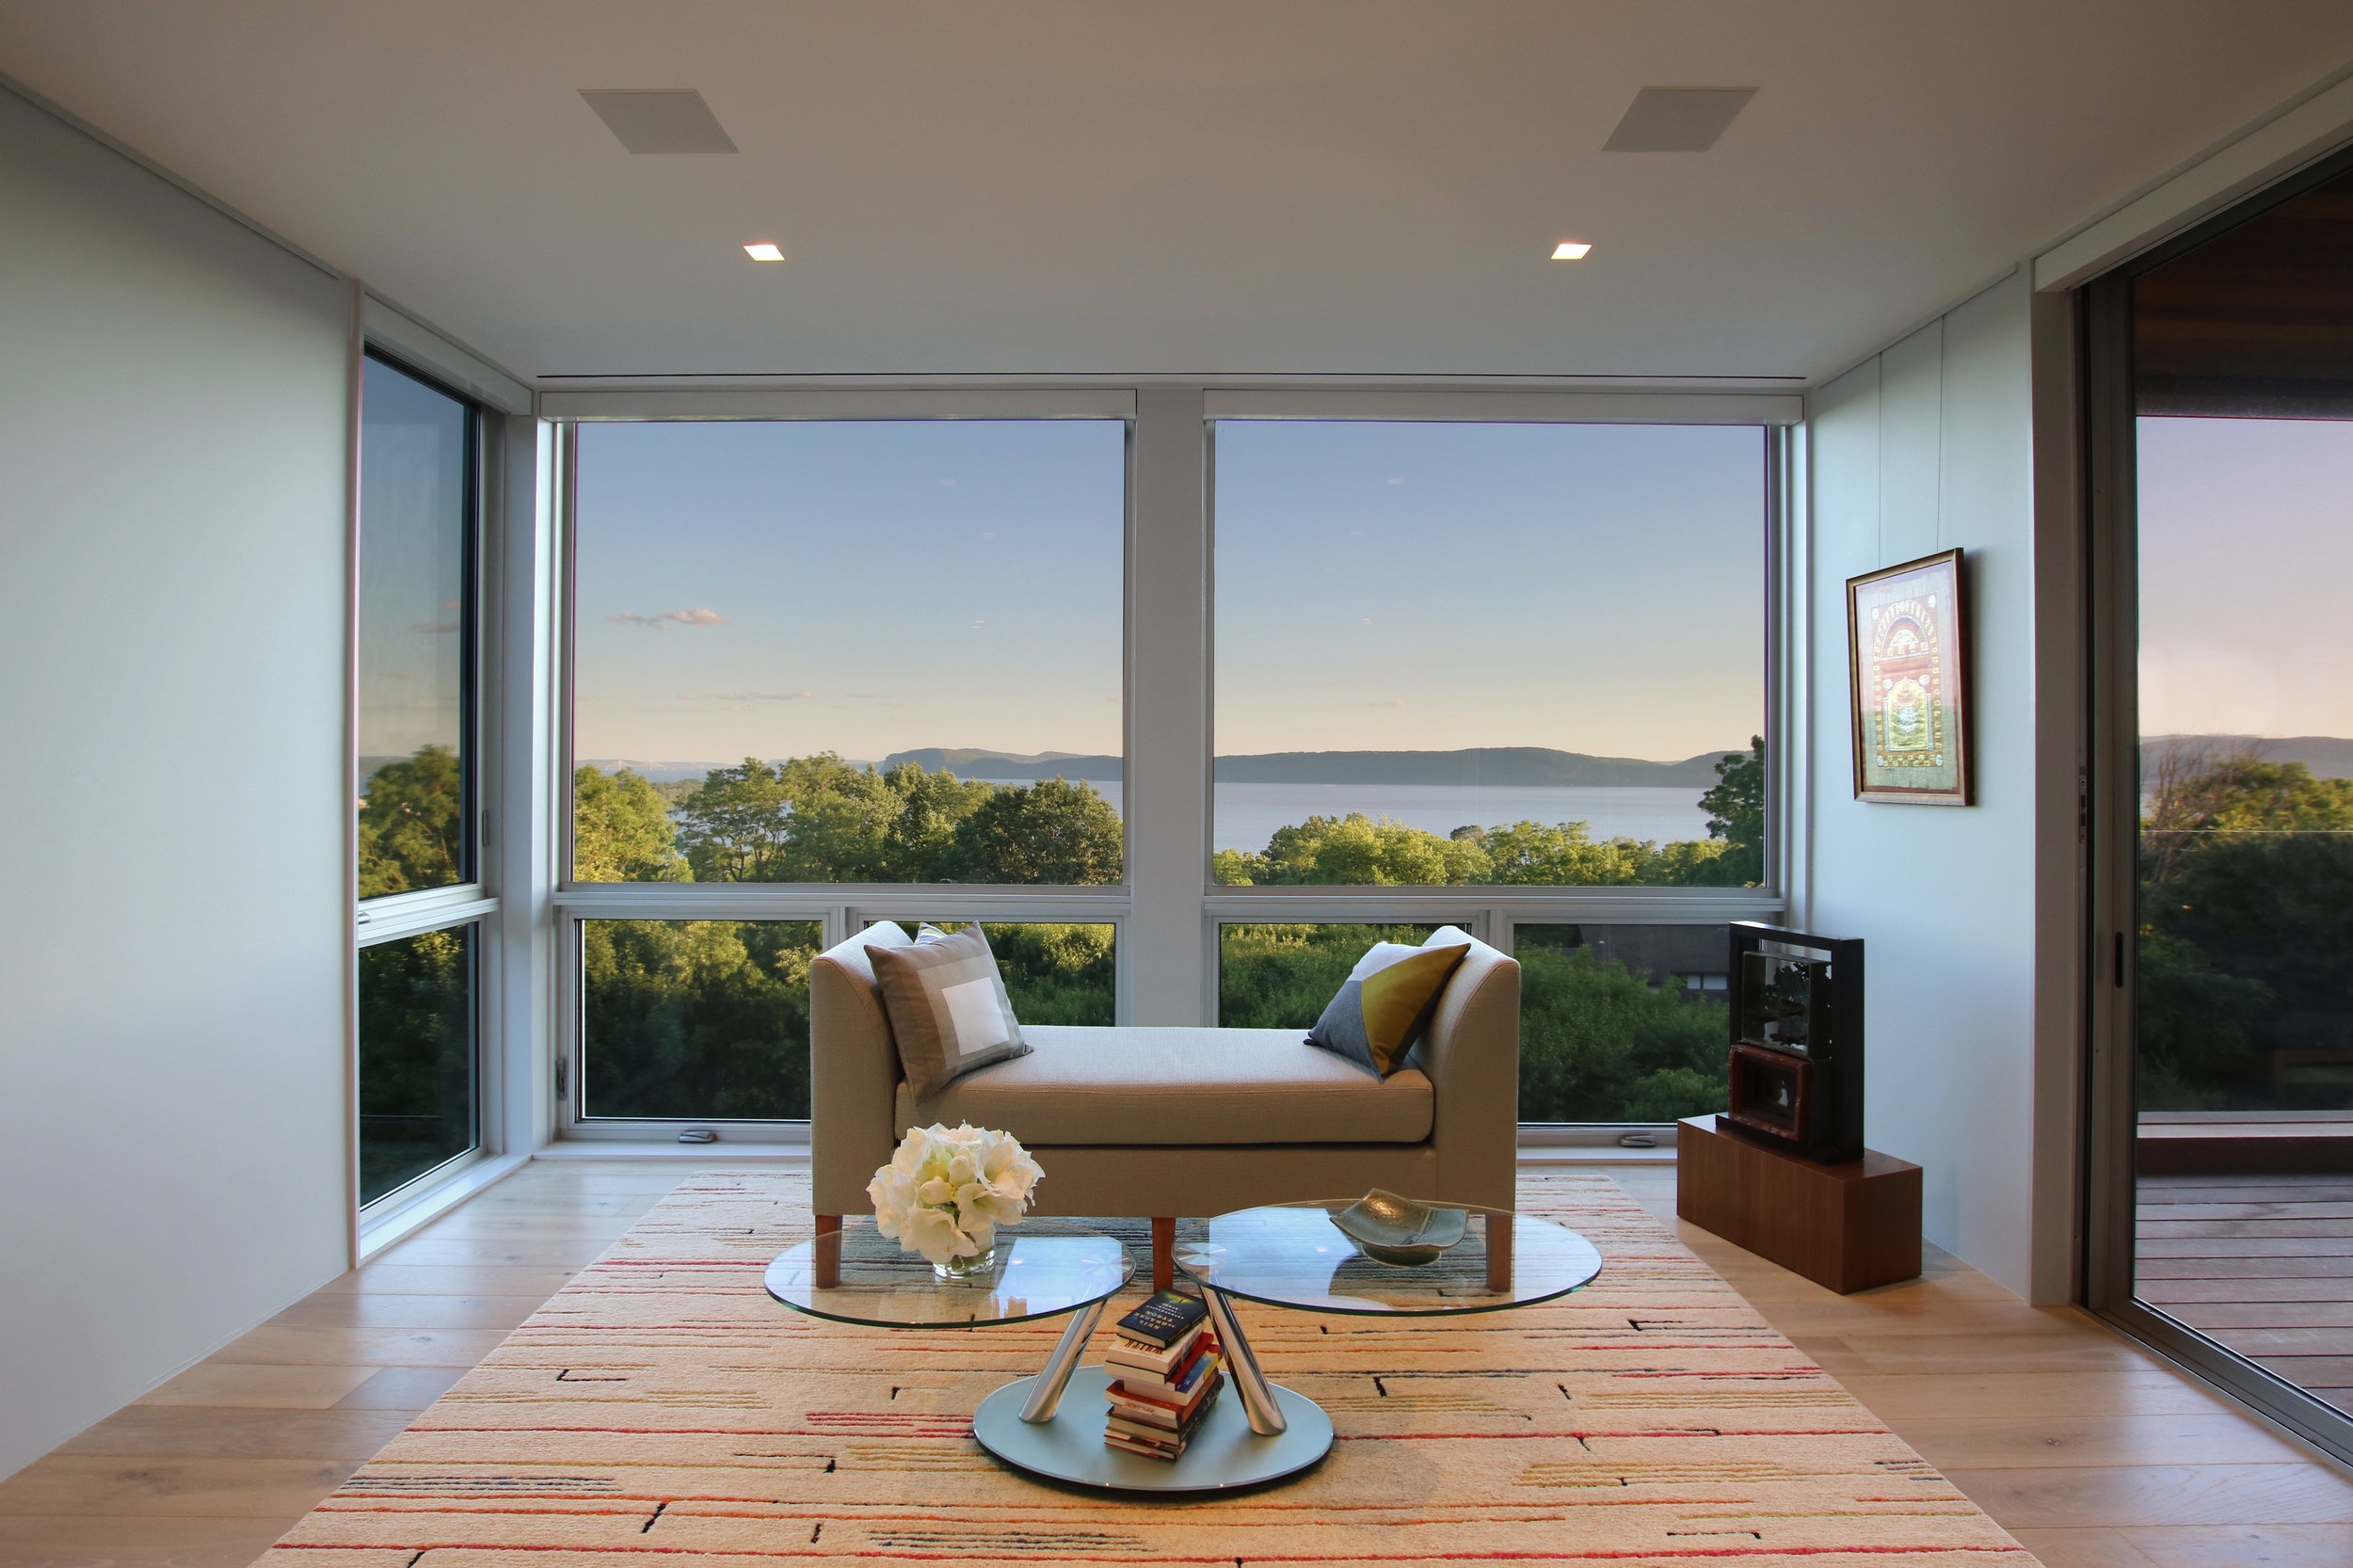 15-res4-resolution-4-architecture-modern-residential-hudson-river-house-crotononhudson-newyork-interior-bedroom-view.jpg